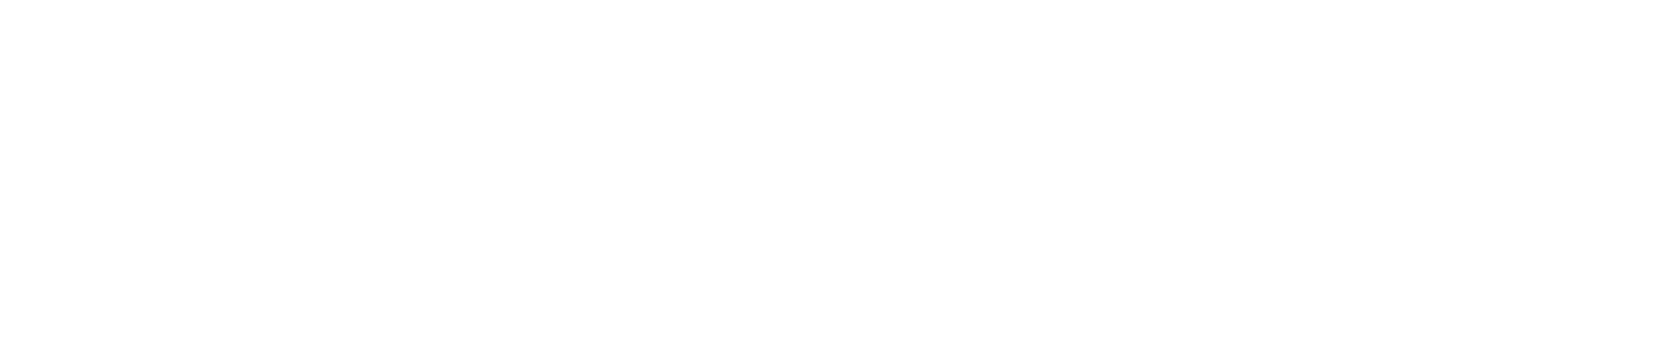 Sylvamo logo large for dark backgrounds (transparent PNG)